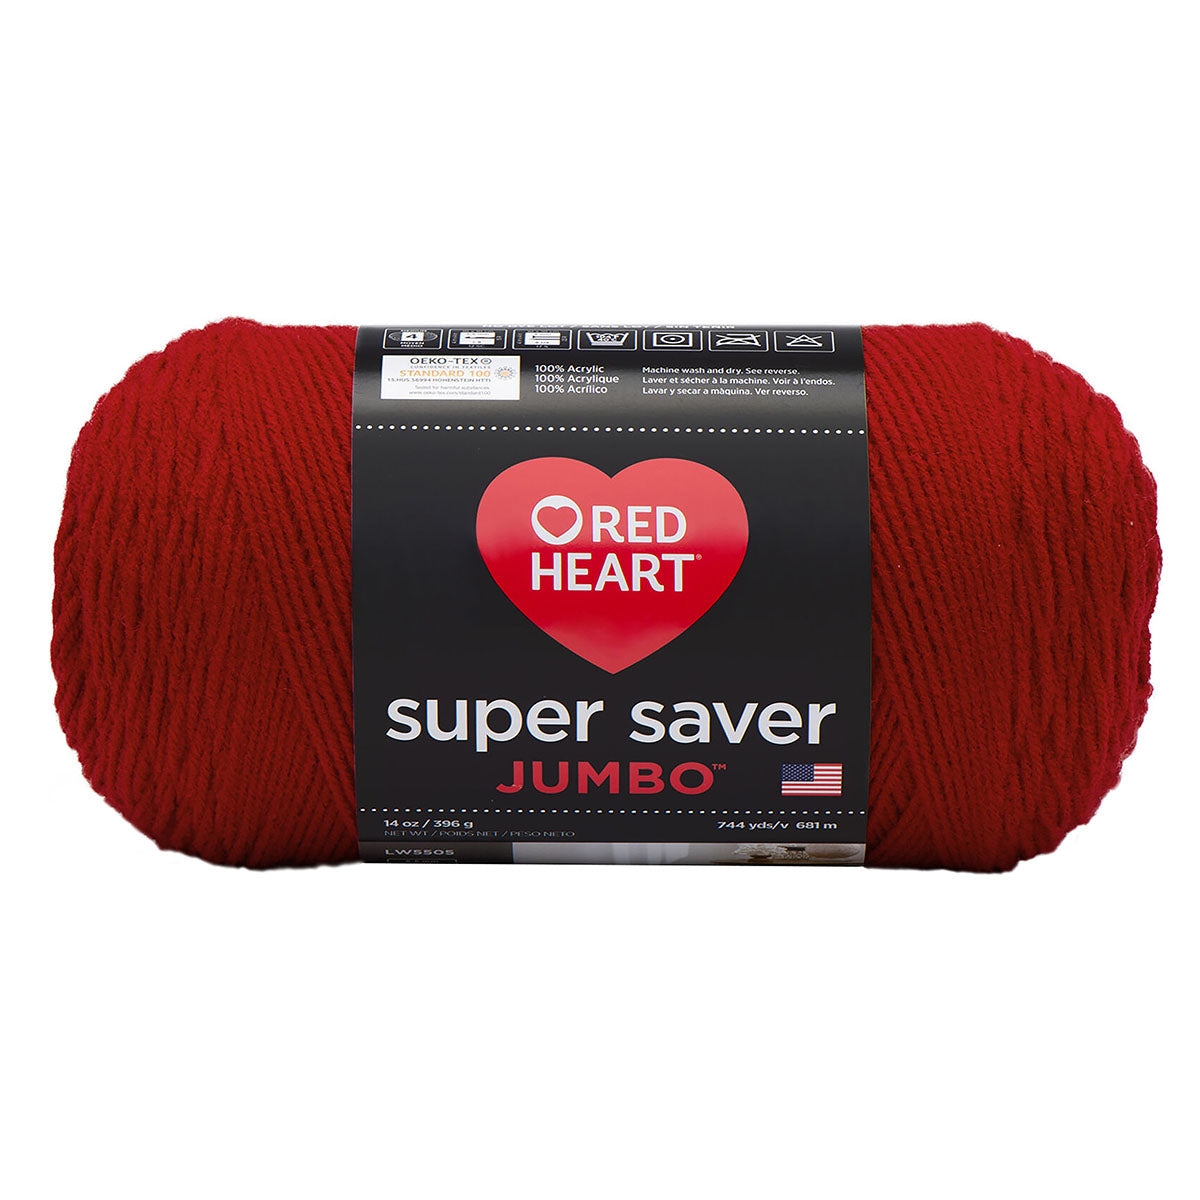 Red Heart Super Saver Jumbo Yarn - 744 yds